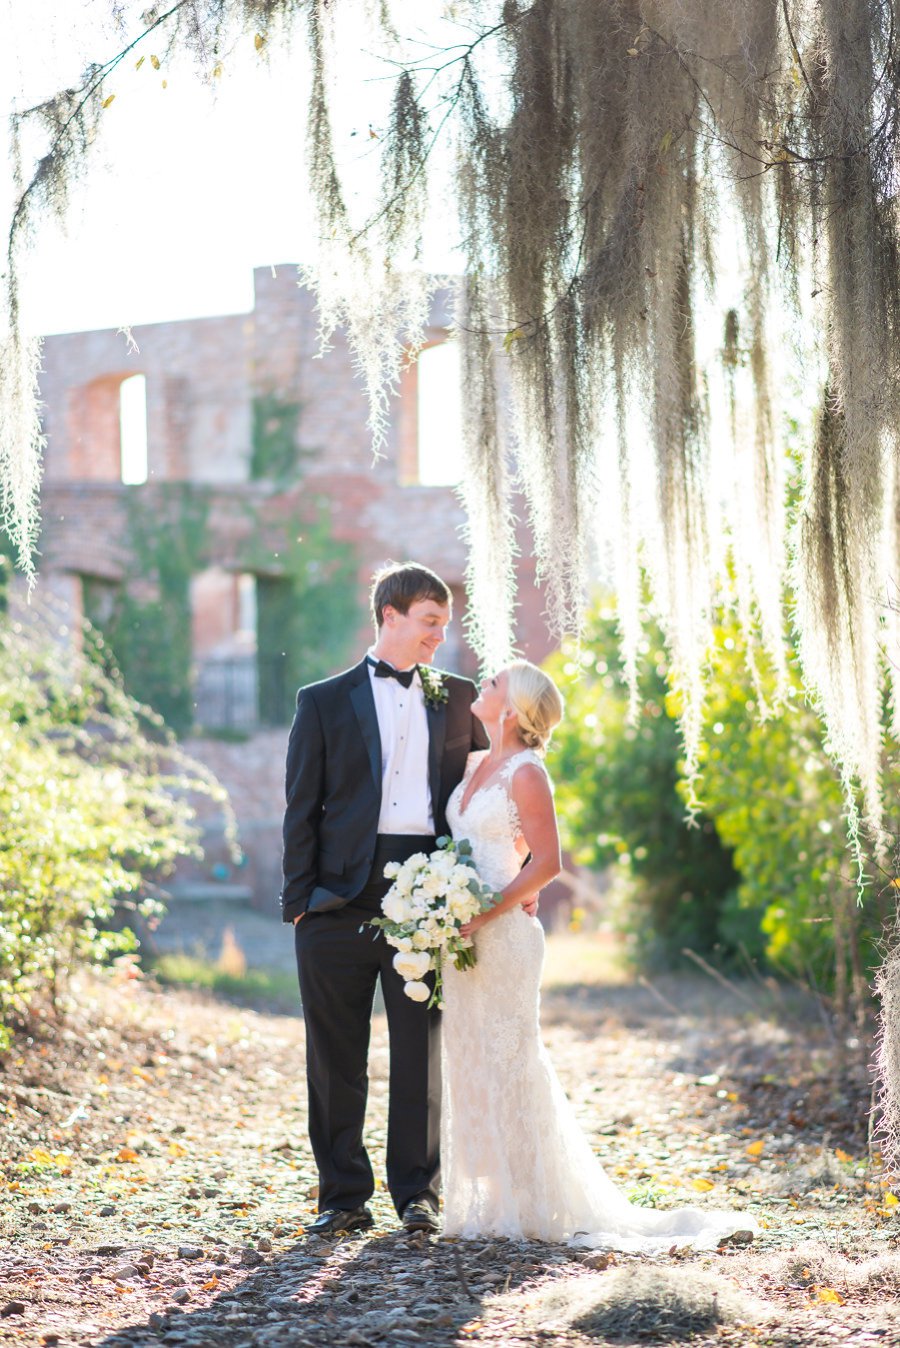 An Elegant White & Green Georgia Winter Wedding Day via TheELD.com